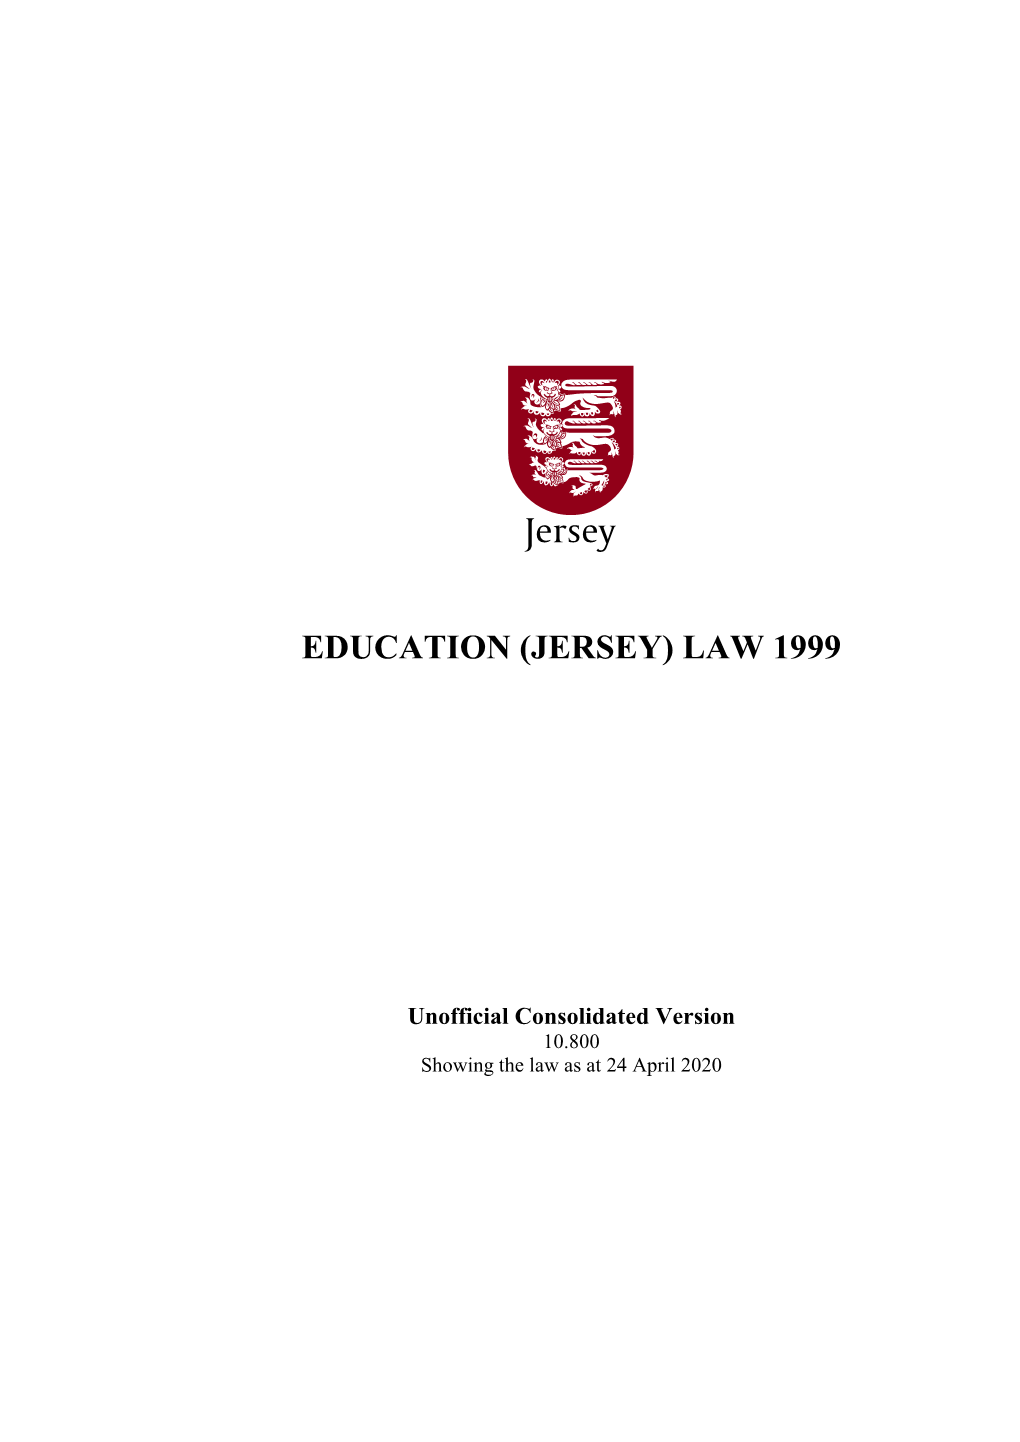 Education (Jersey) Law 1999